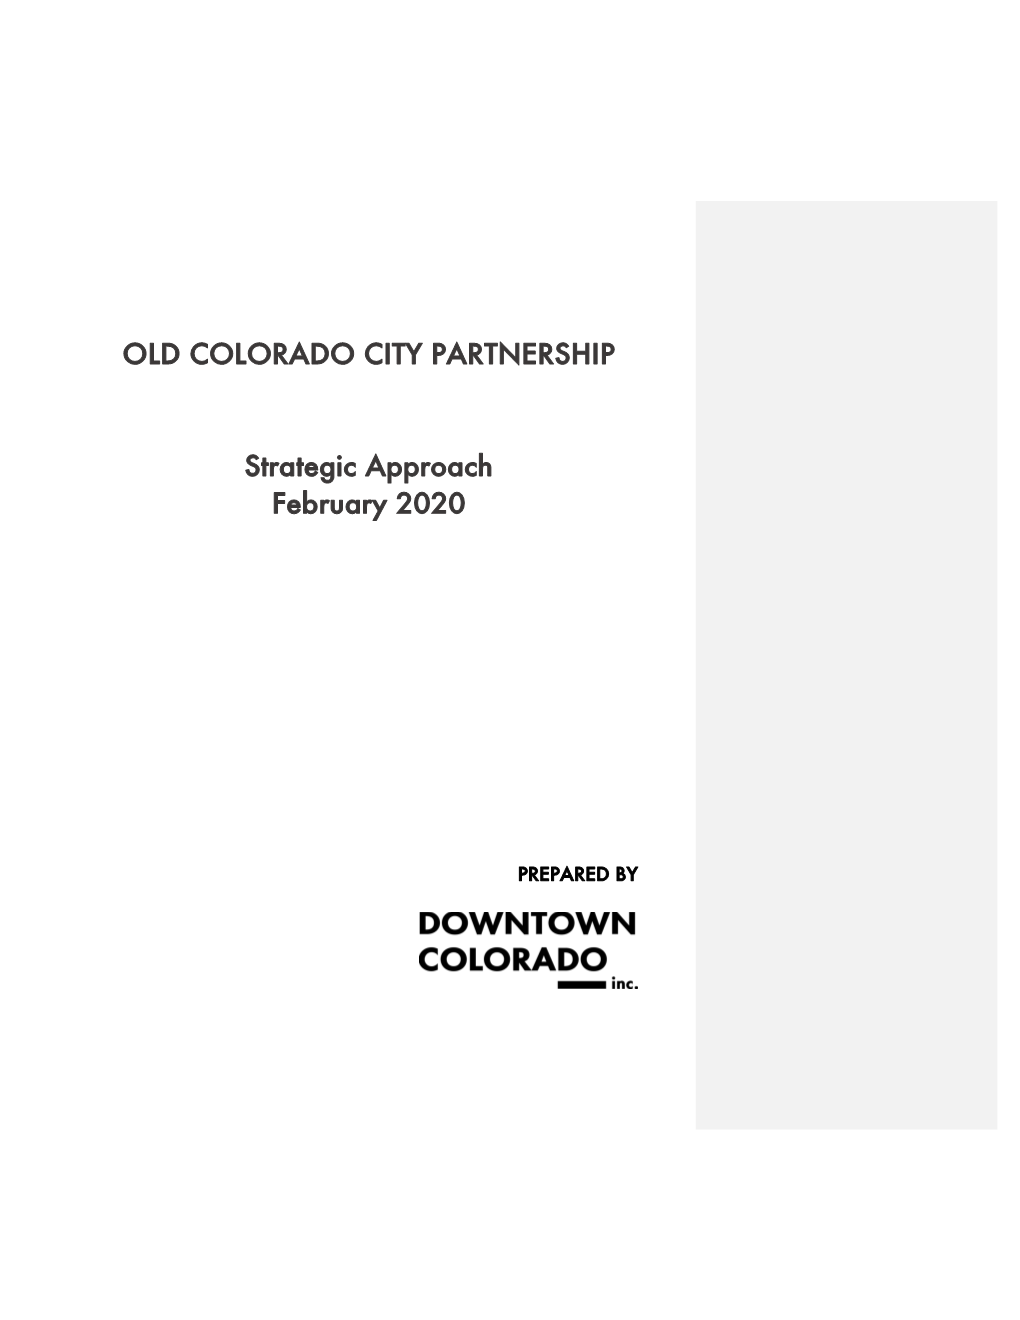 Old Colorado City Partnership Strategic Planning Retreat